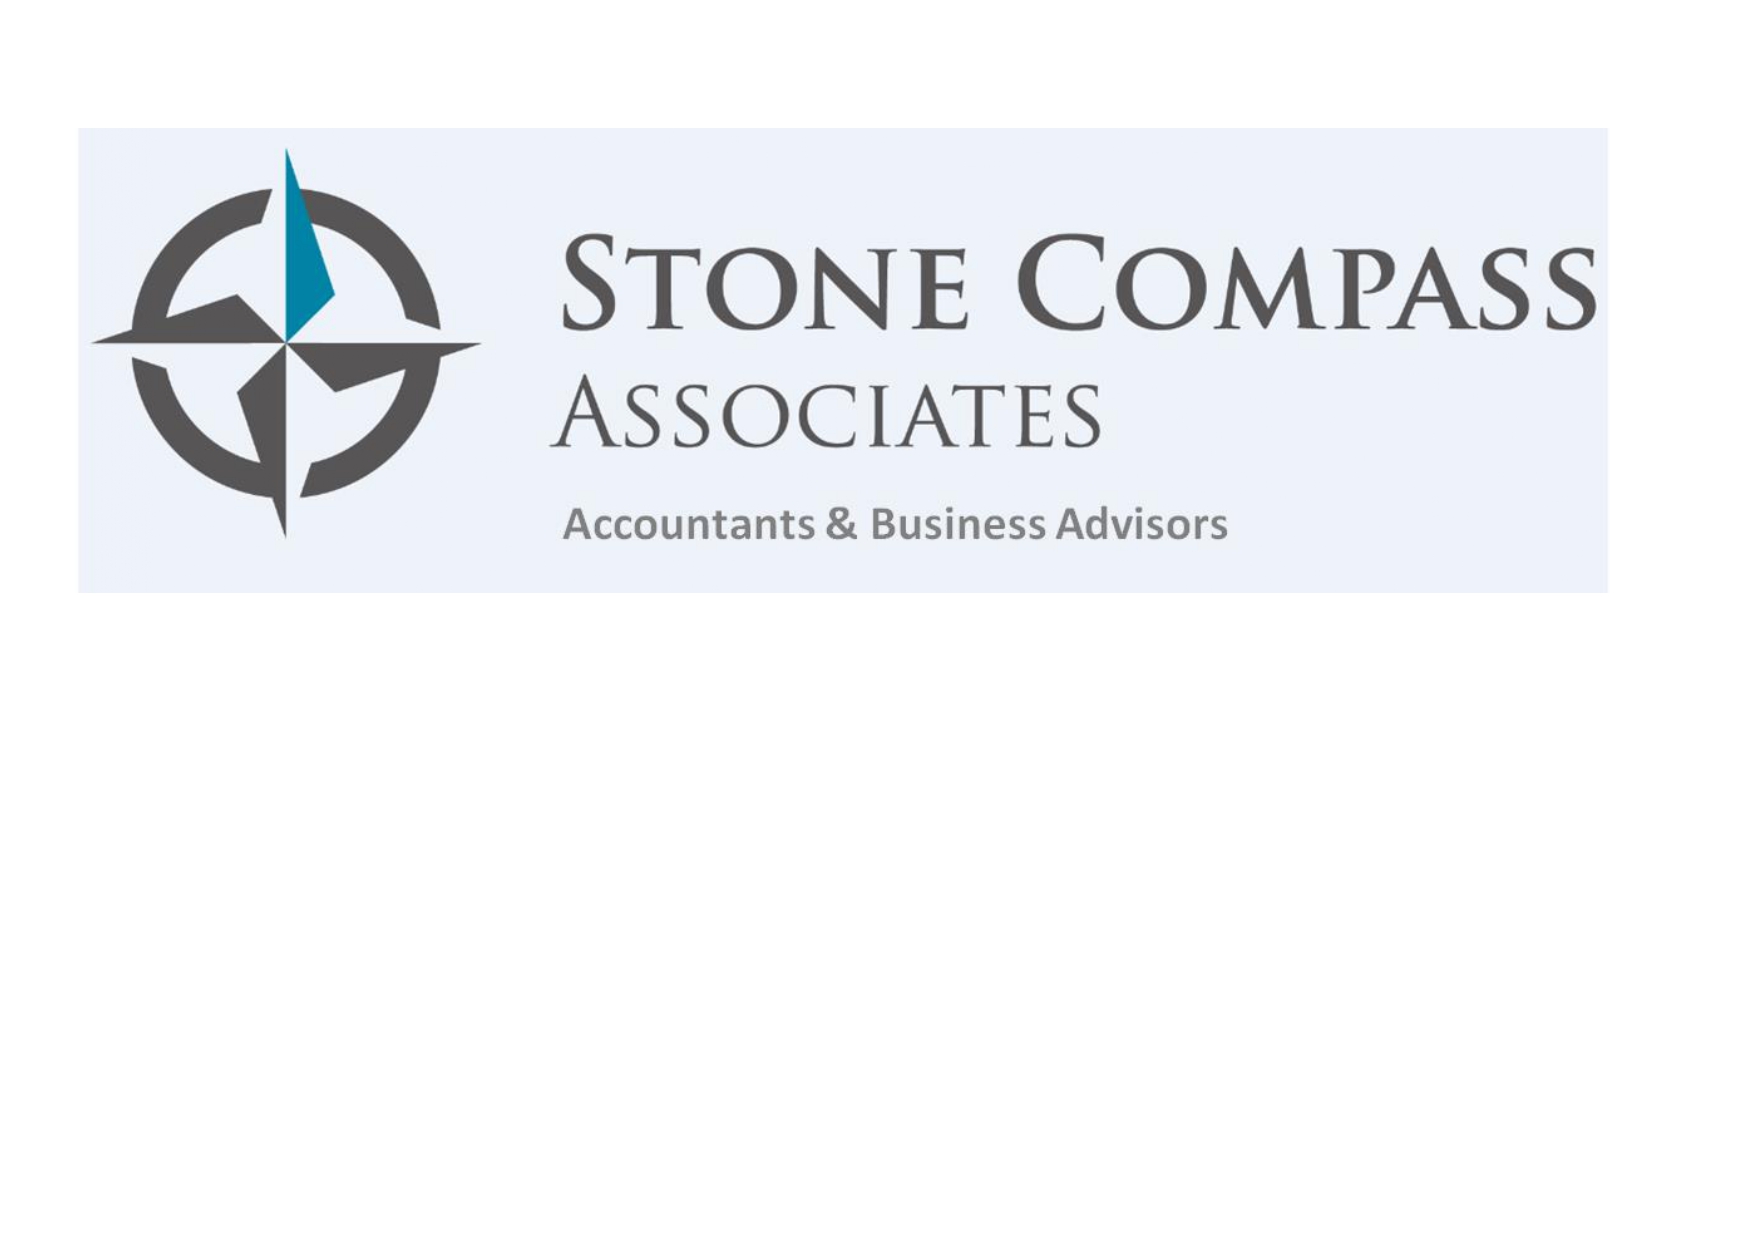 Stone Compass Associates